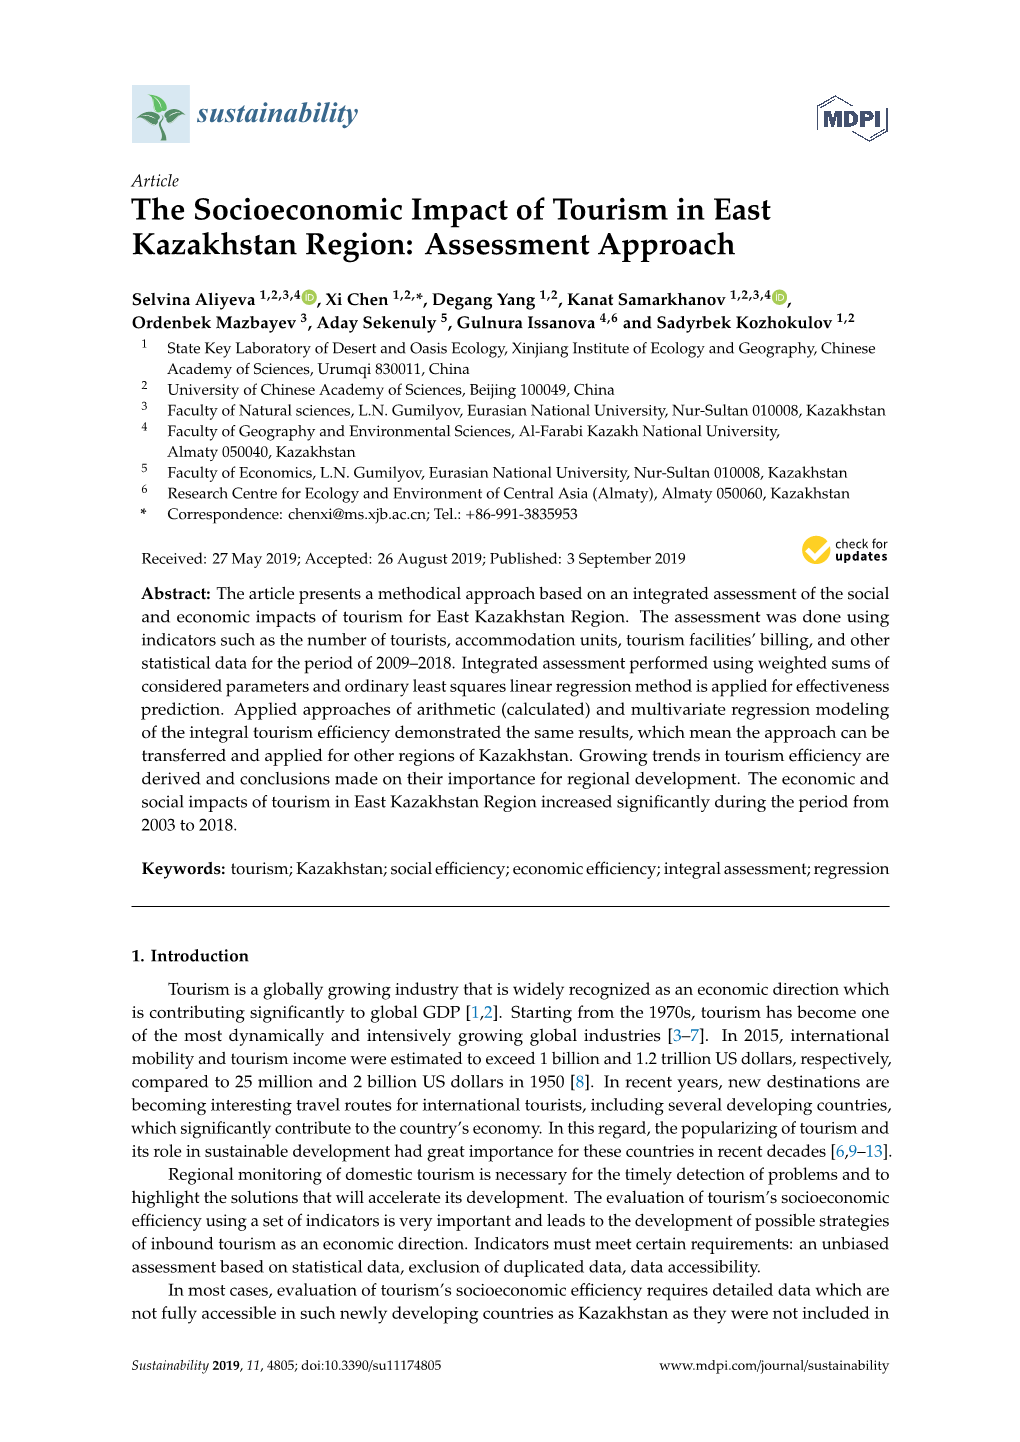 The Socioeconomic Impact of Tourism in East Kazakhstan Region: Assessment Approach